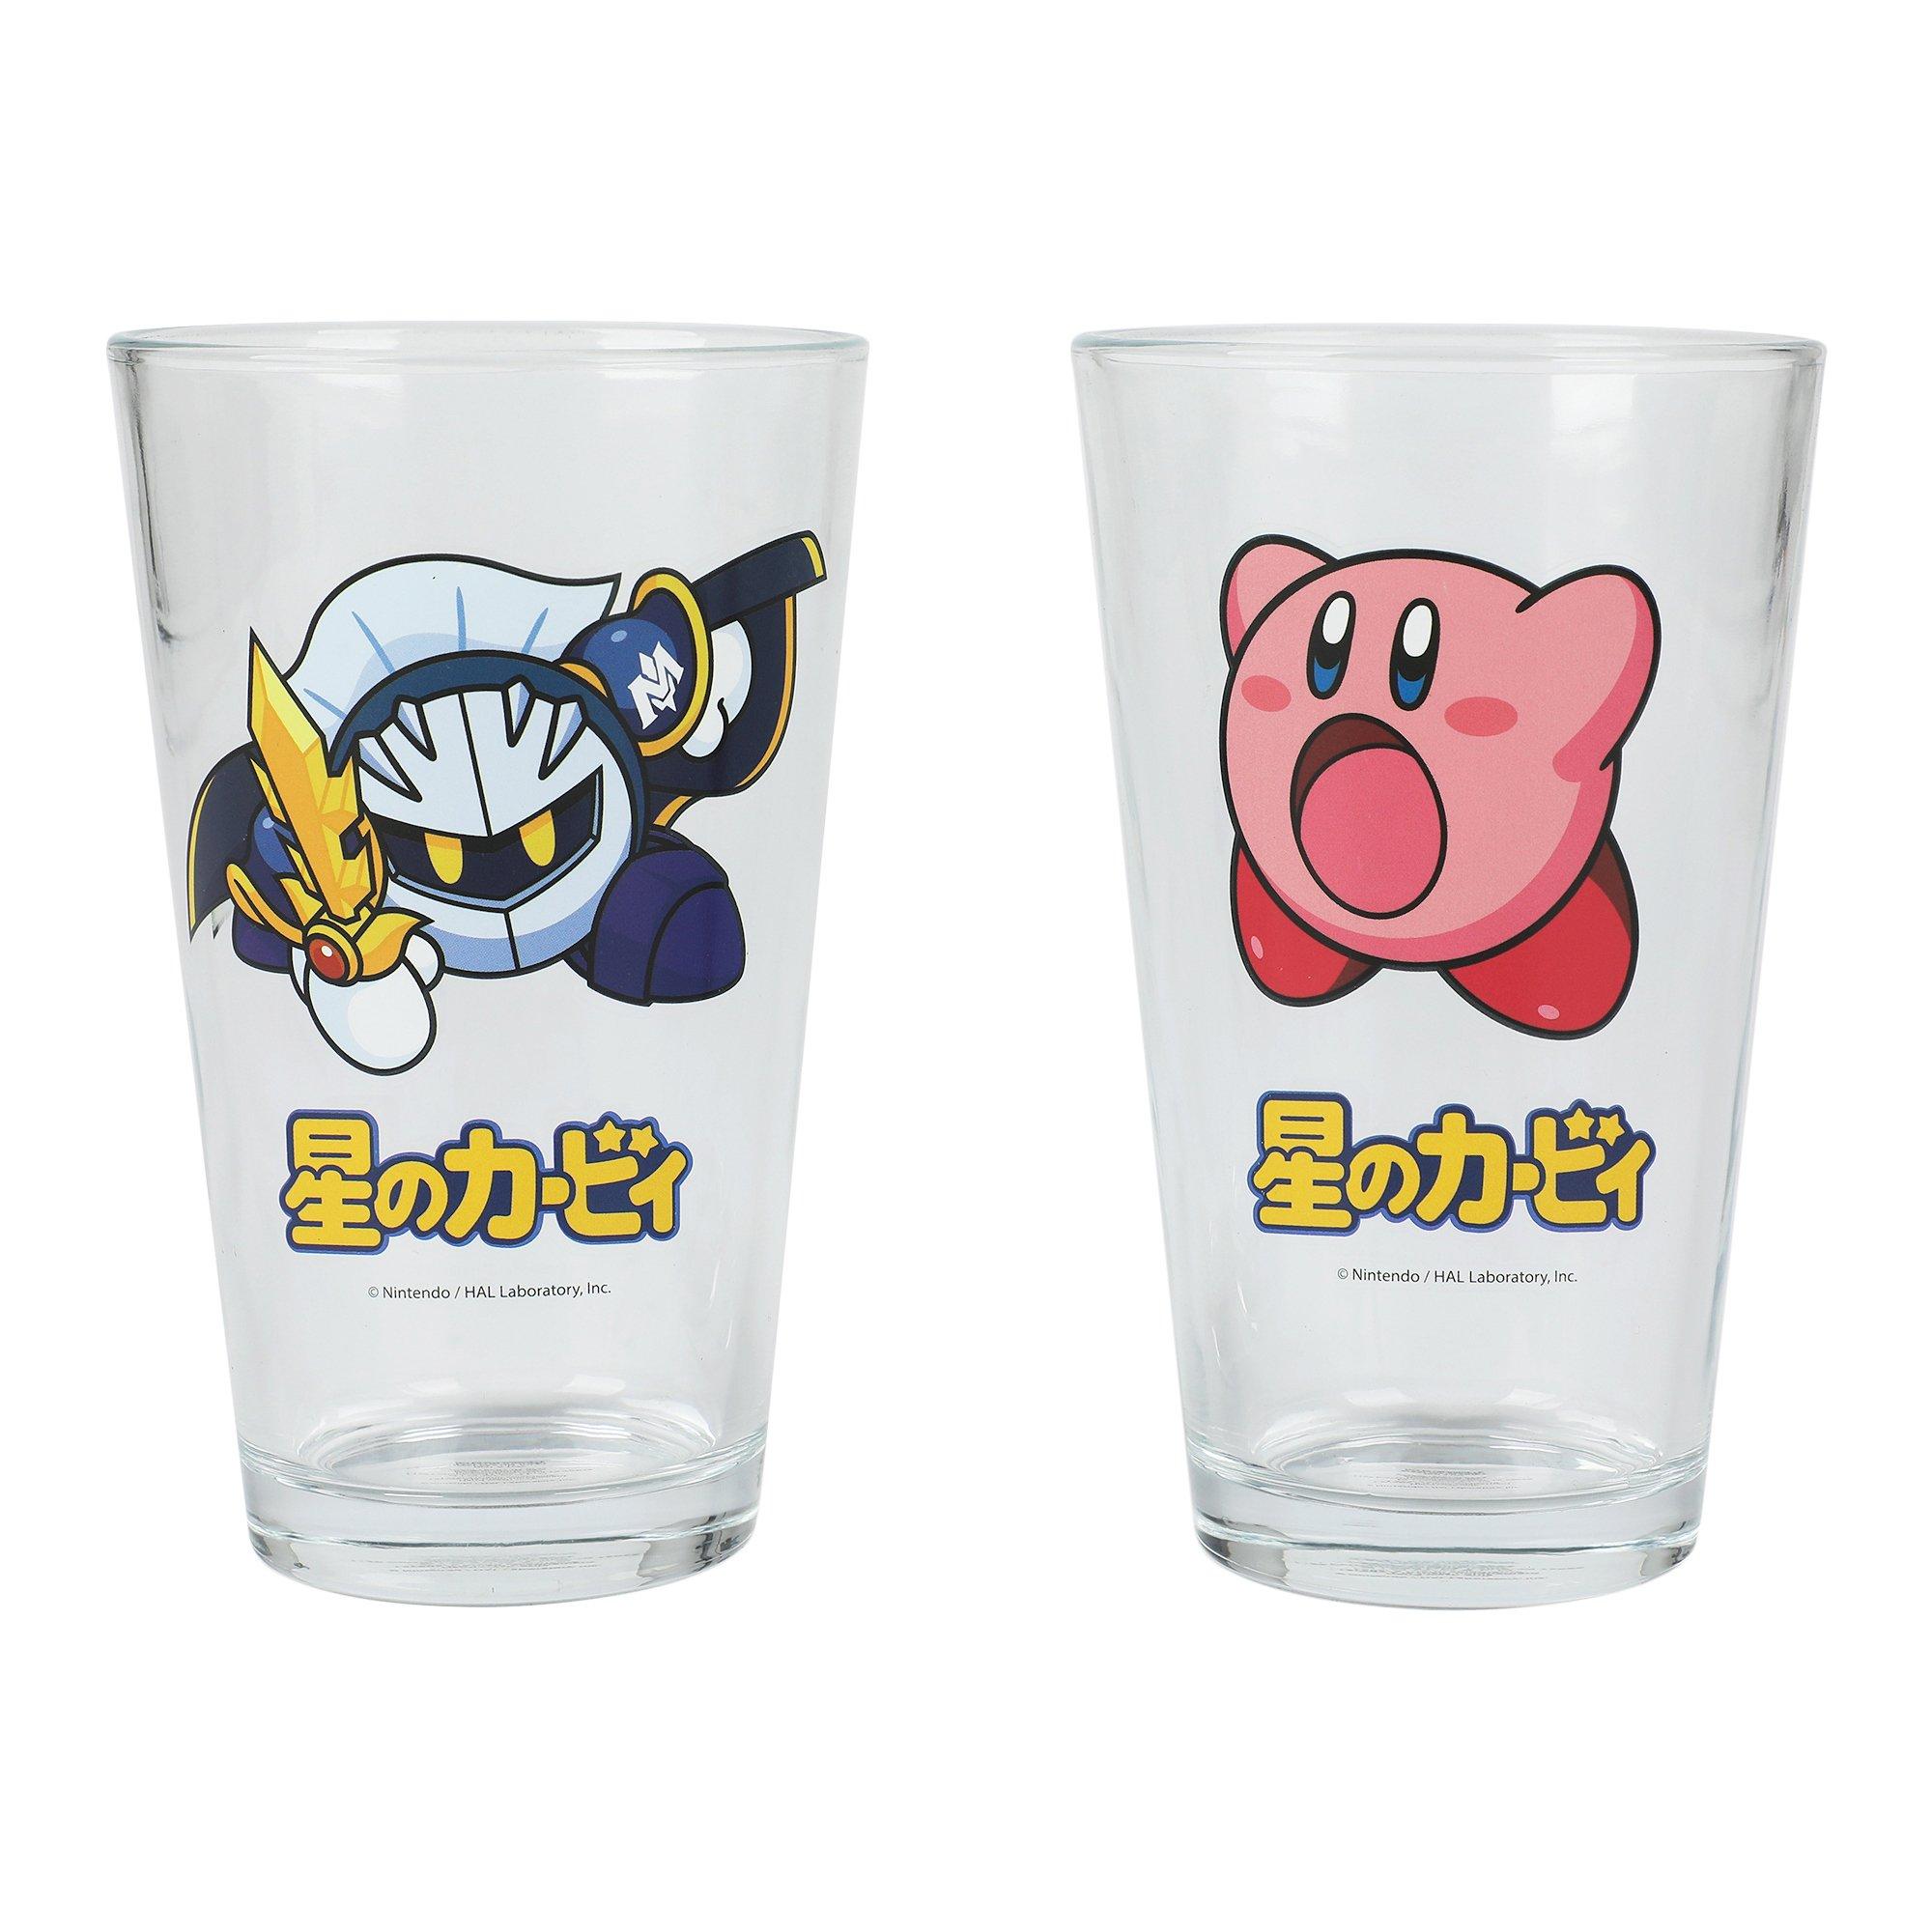 https://media.gamestop.com/i/gamestop/20004463/Kirby-and-Meta-Knight-16-oz.-Pint-Glass-Set-2-Pack?$pdp$